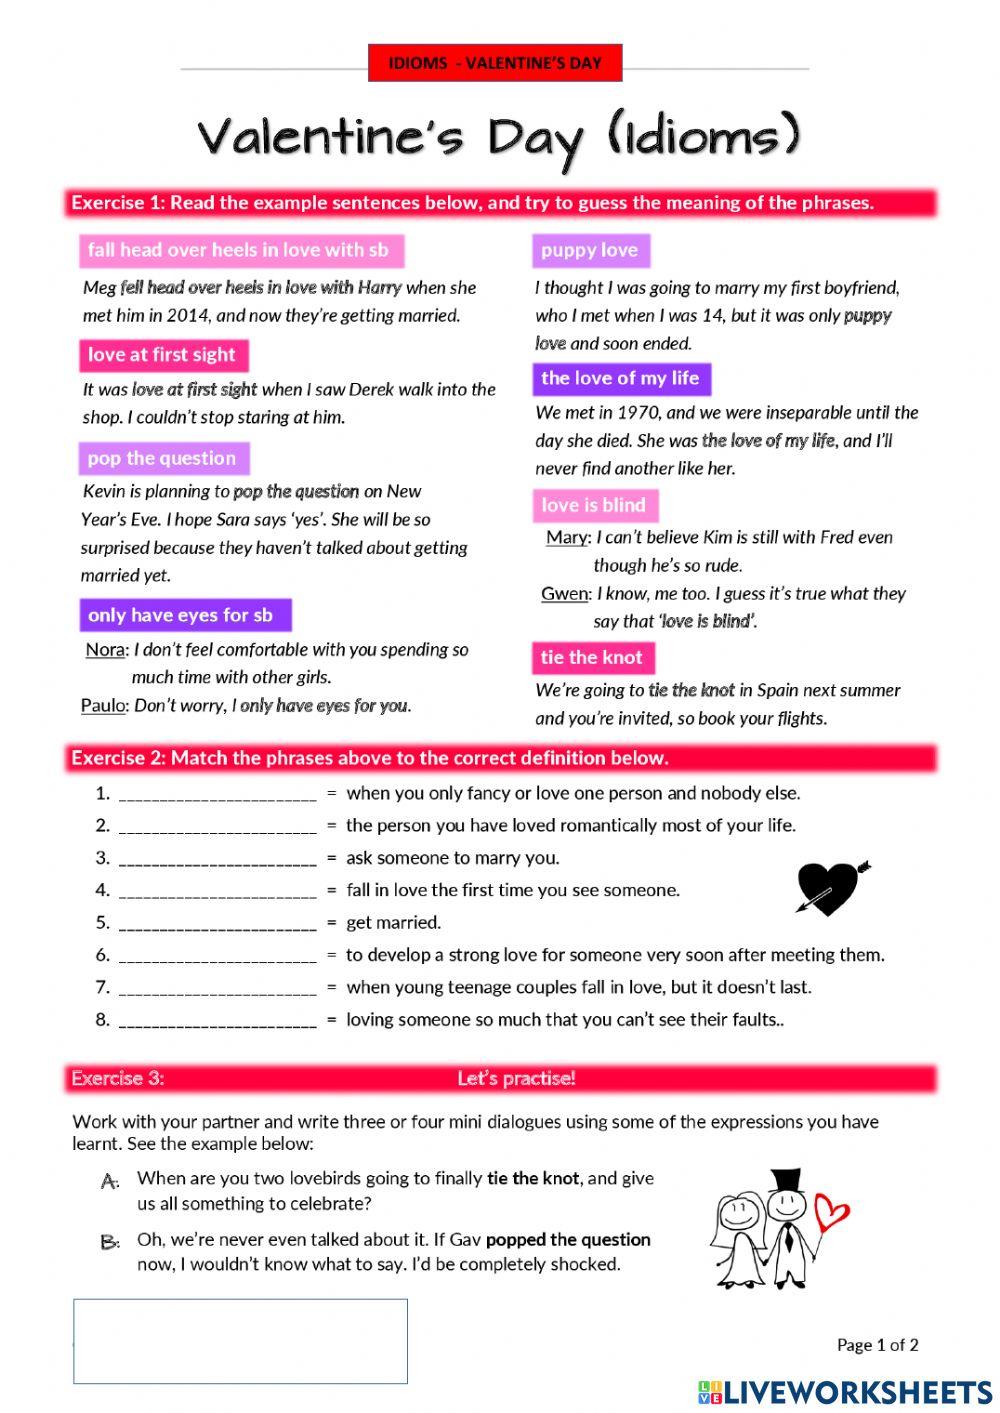 Valentine's day idioms